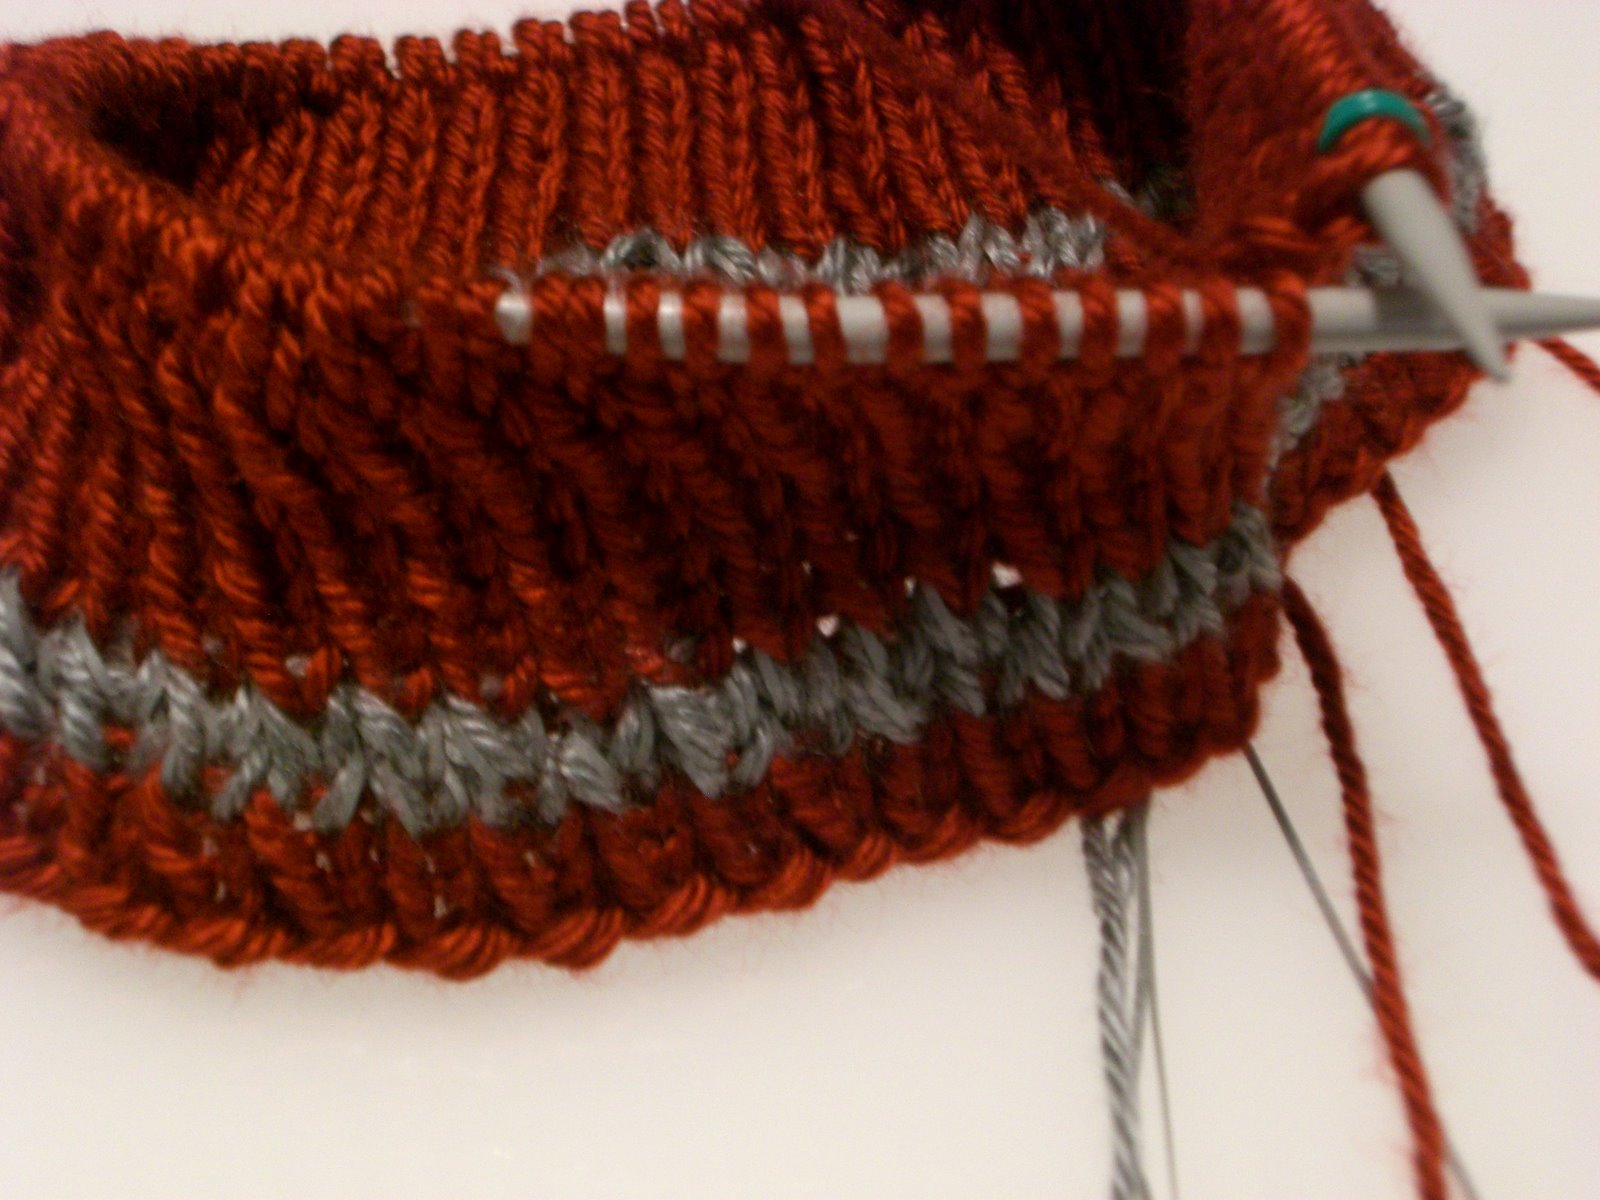 Knitting with Retroglo reflective yarn